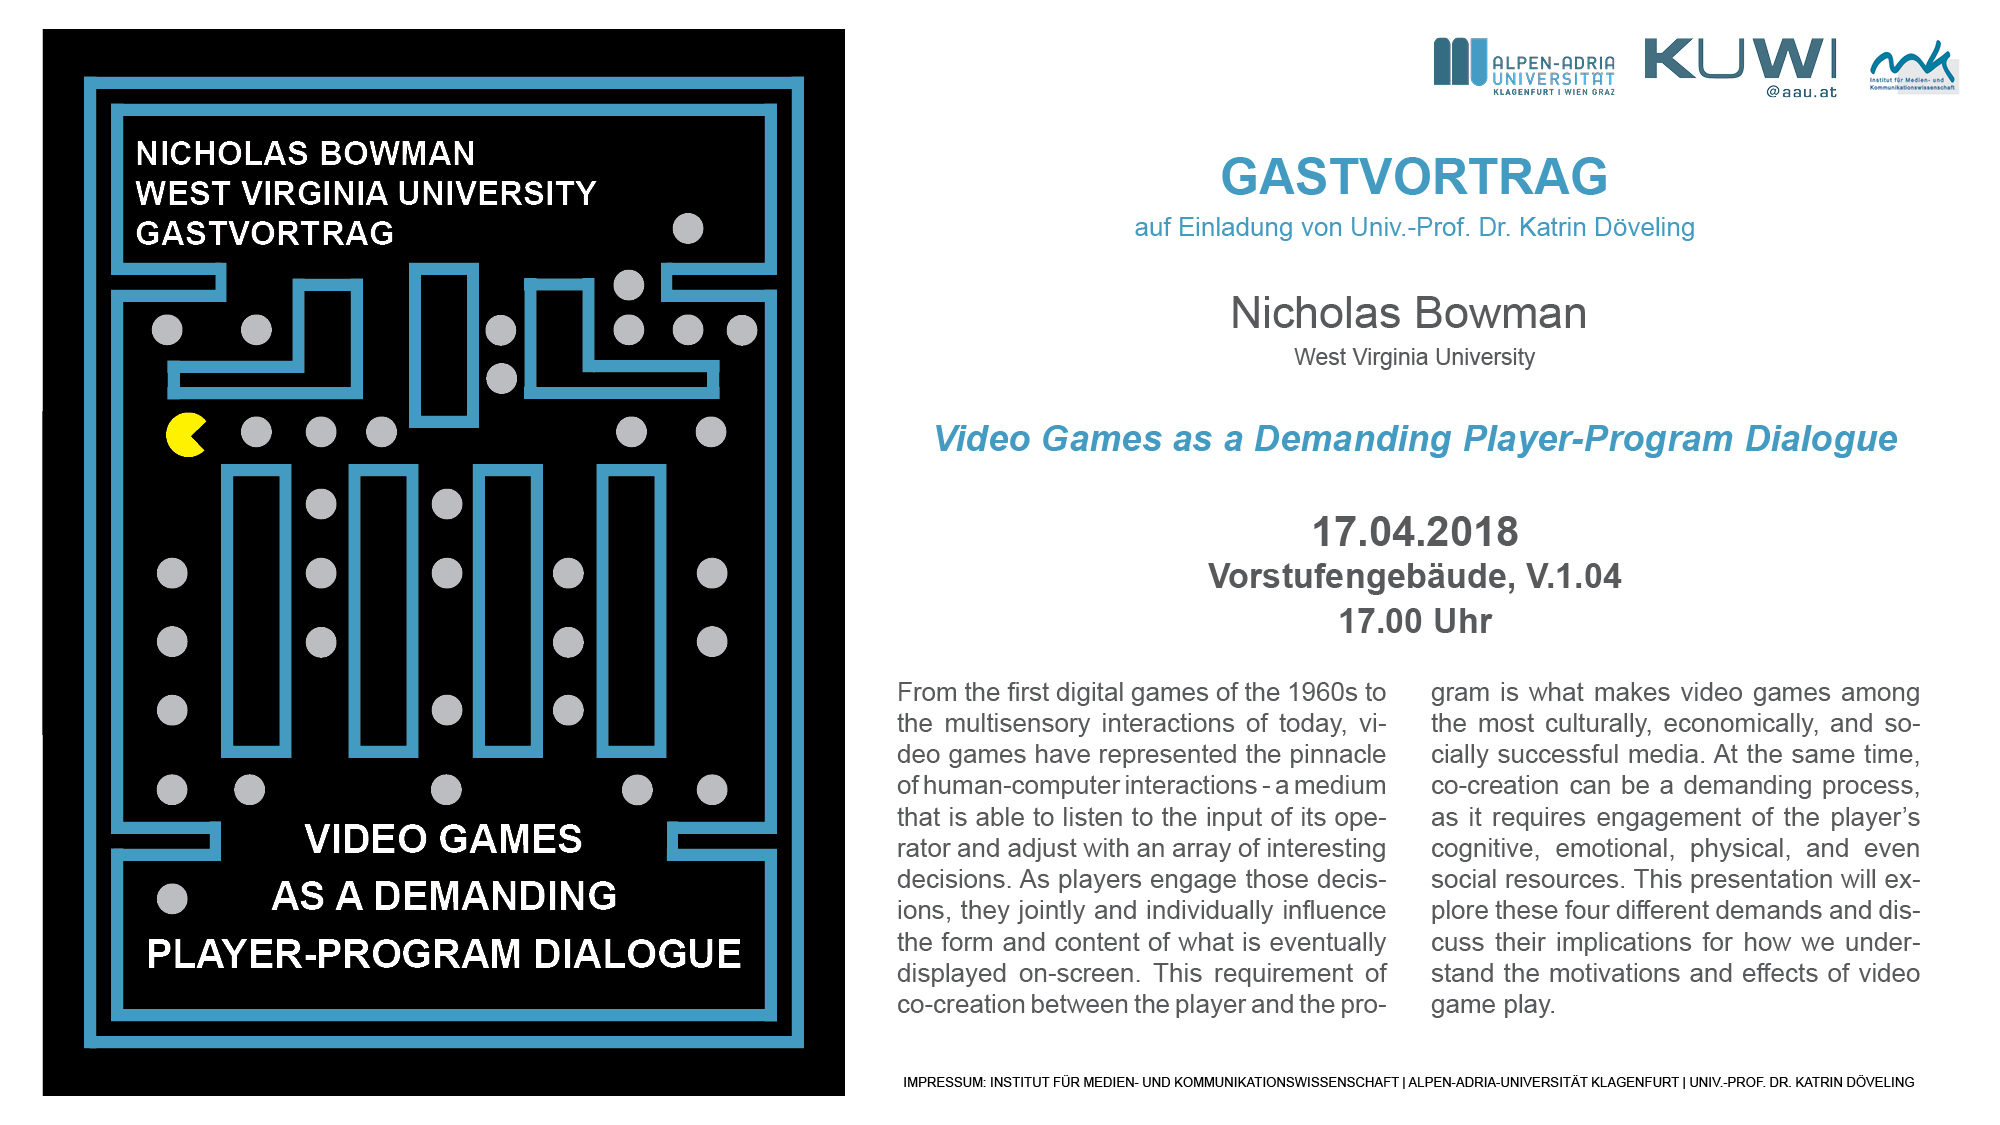 Gastvortrag “Video Games as a Demanding Player-Program Dialogue”